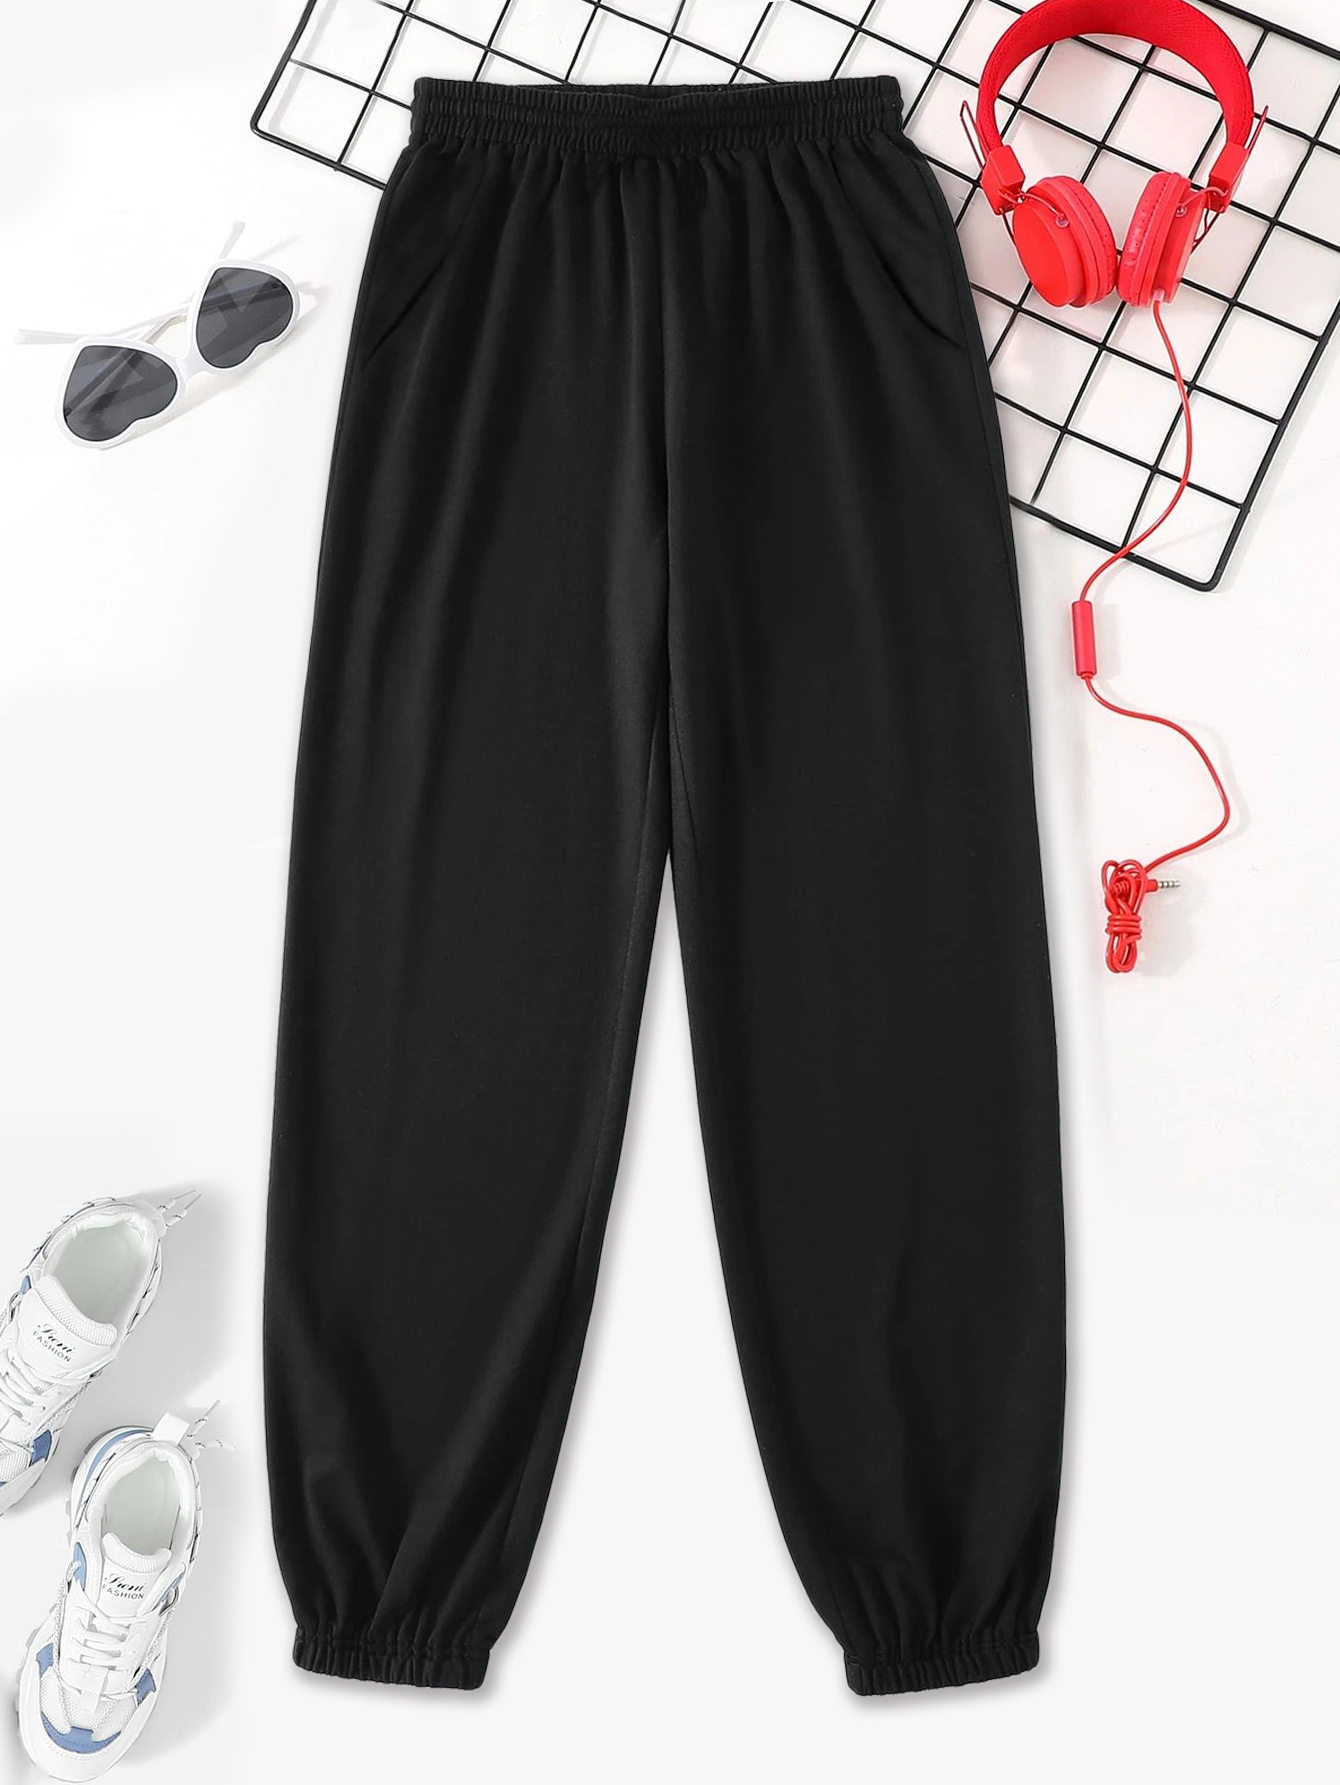 Qcmgmg Cute Sweatpants for Teen Girls Winter Warm High Waist Fuzzy